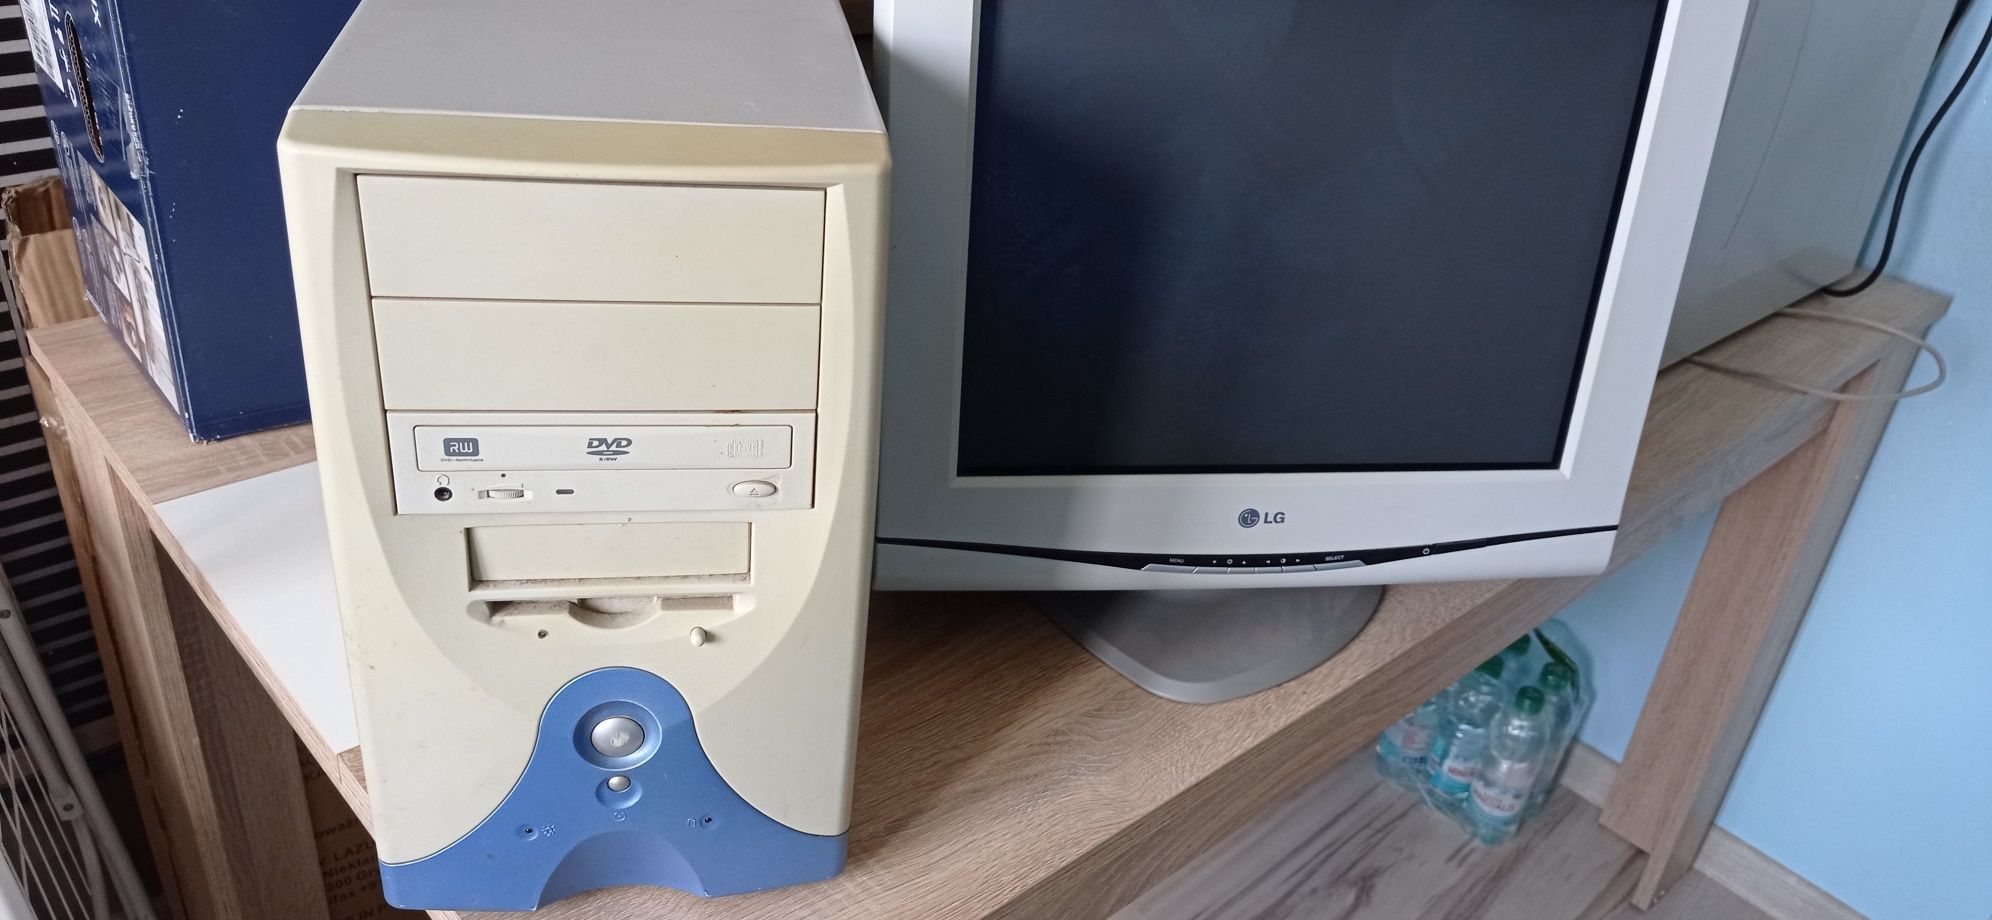 2 x komputer LG z nagrywarka DVD monitorem  płaskim klawiatura mysz